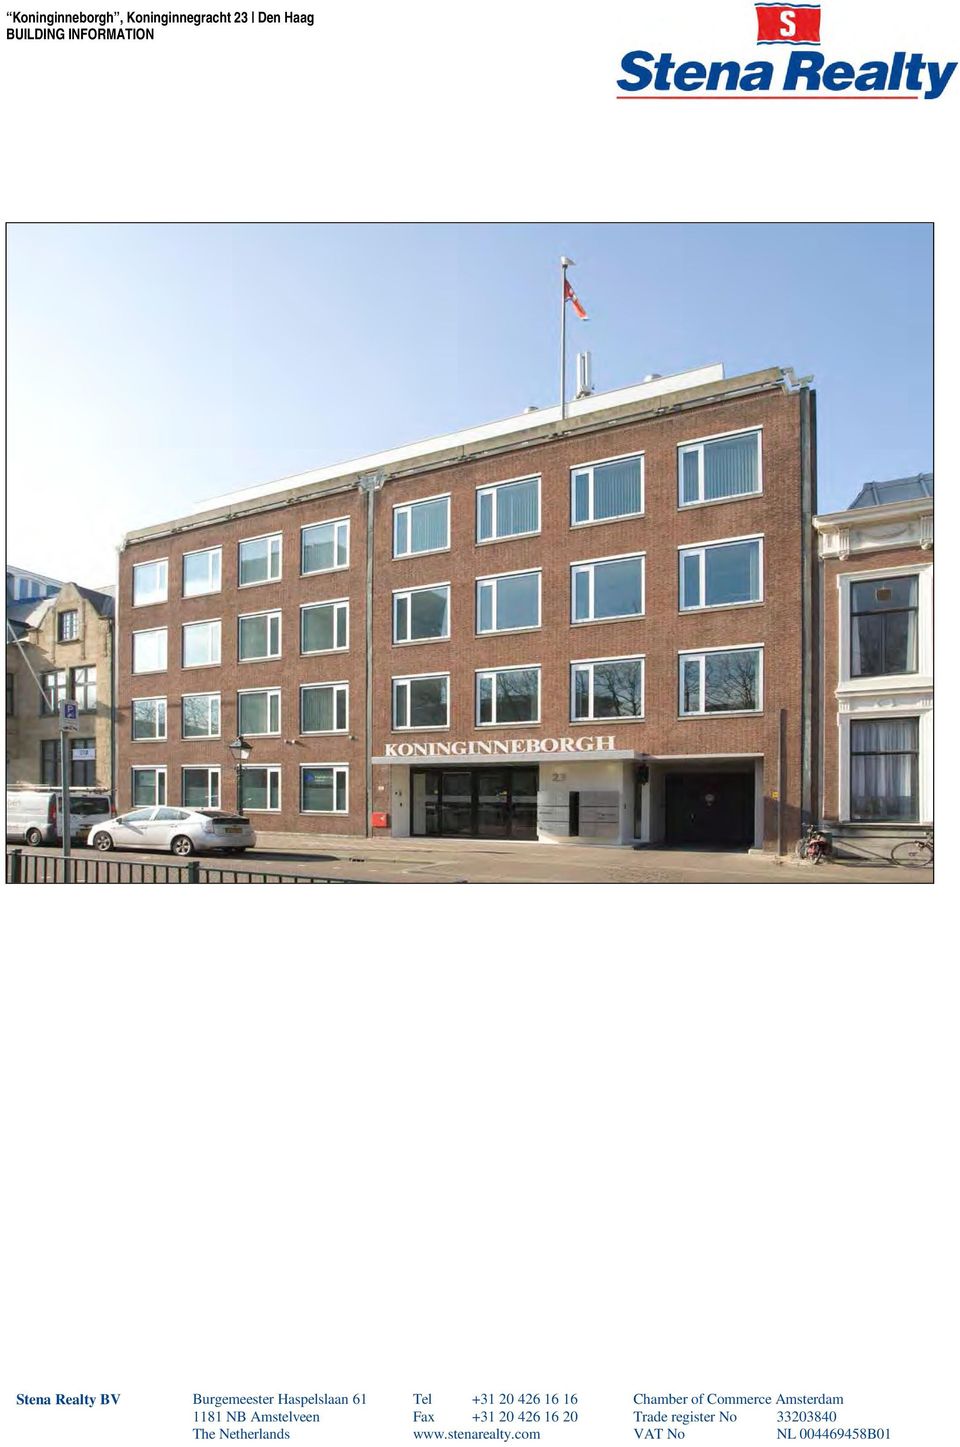 Chamber of Commerce Amsterdam 1181 NB Amstelveen Fax +31 20 426 16 20